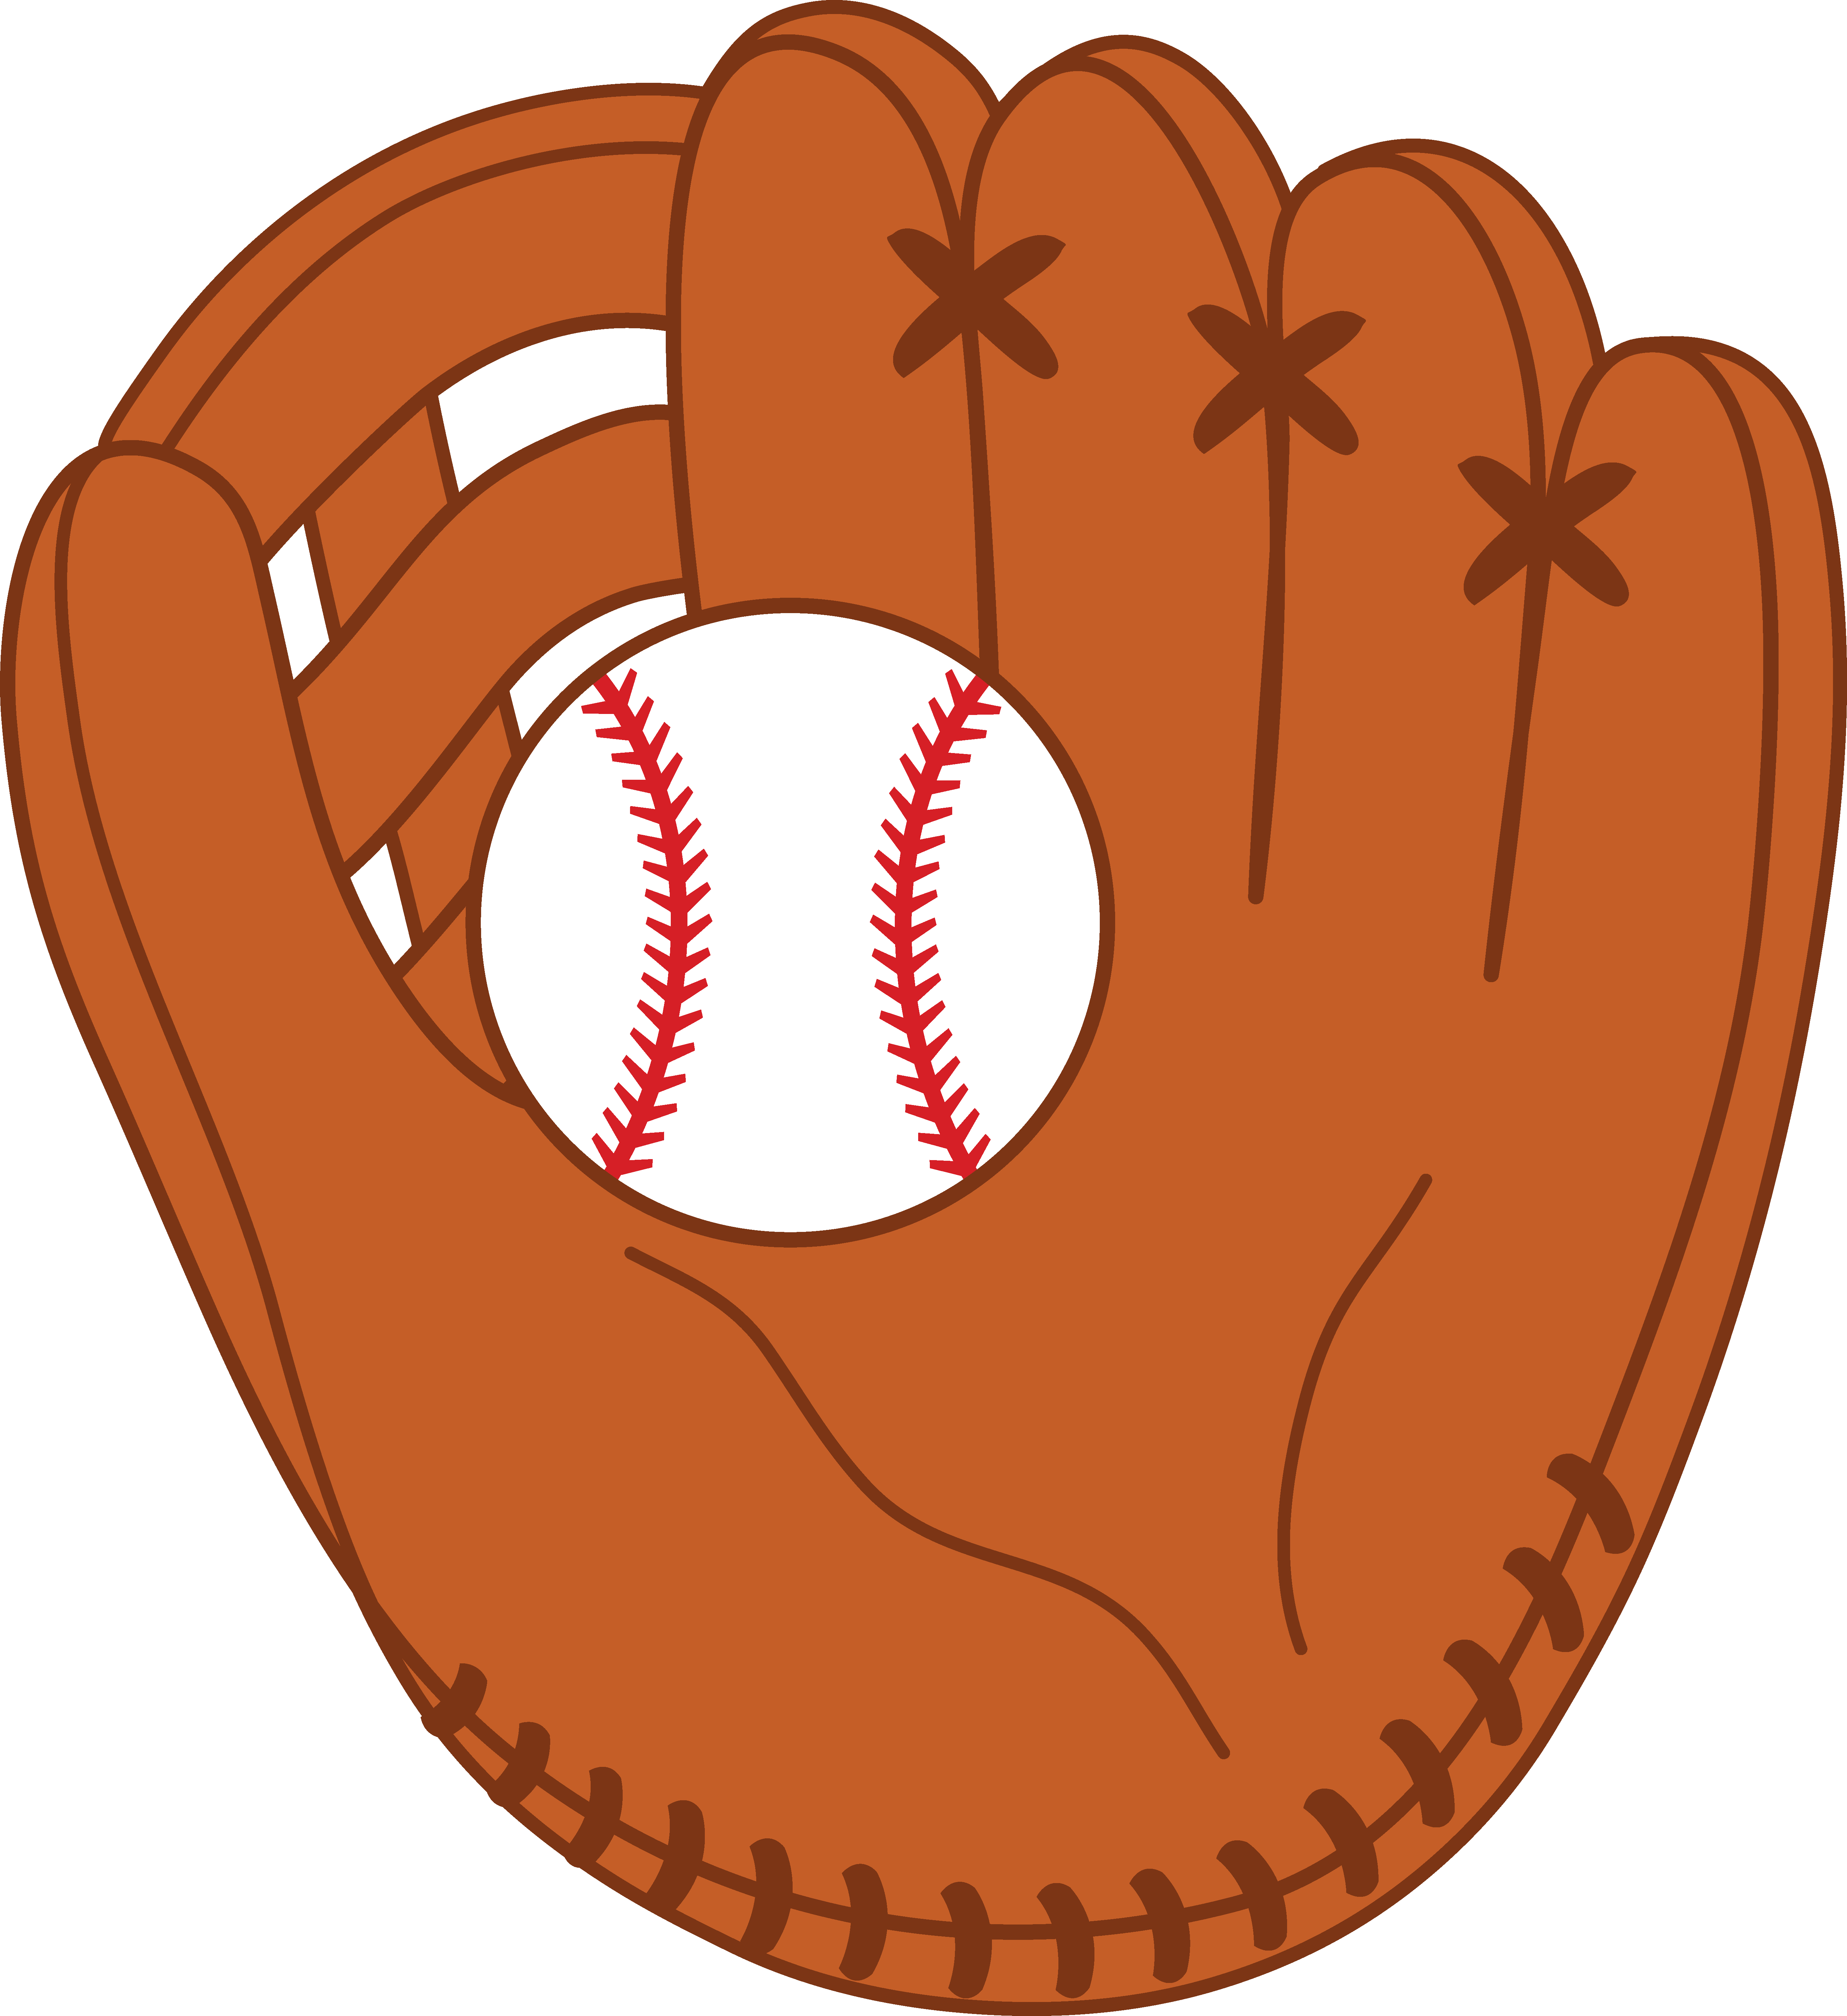 Clip Art Of Baseball - Cliparts.co